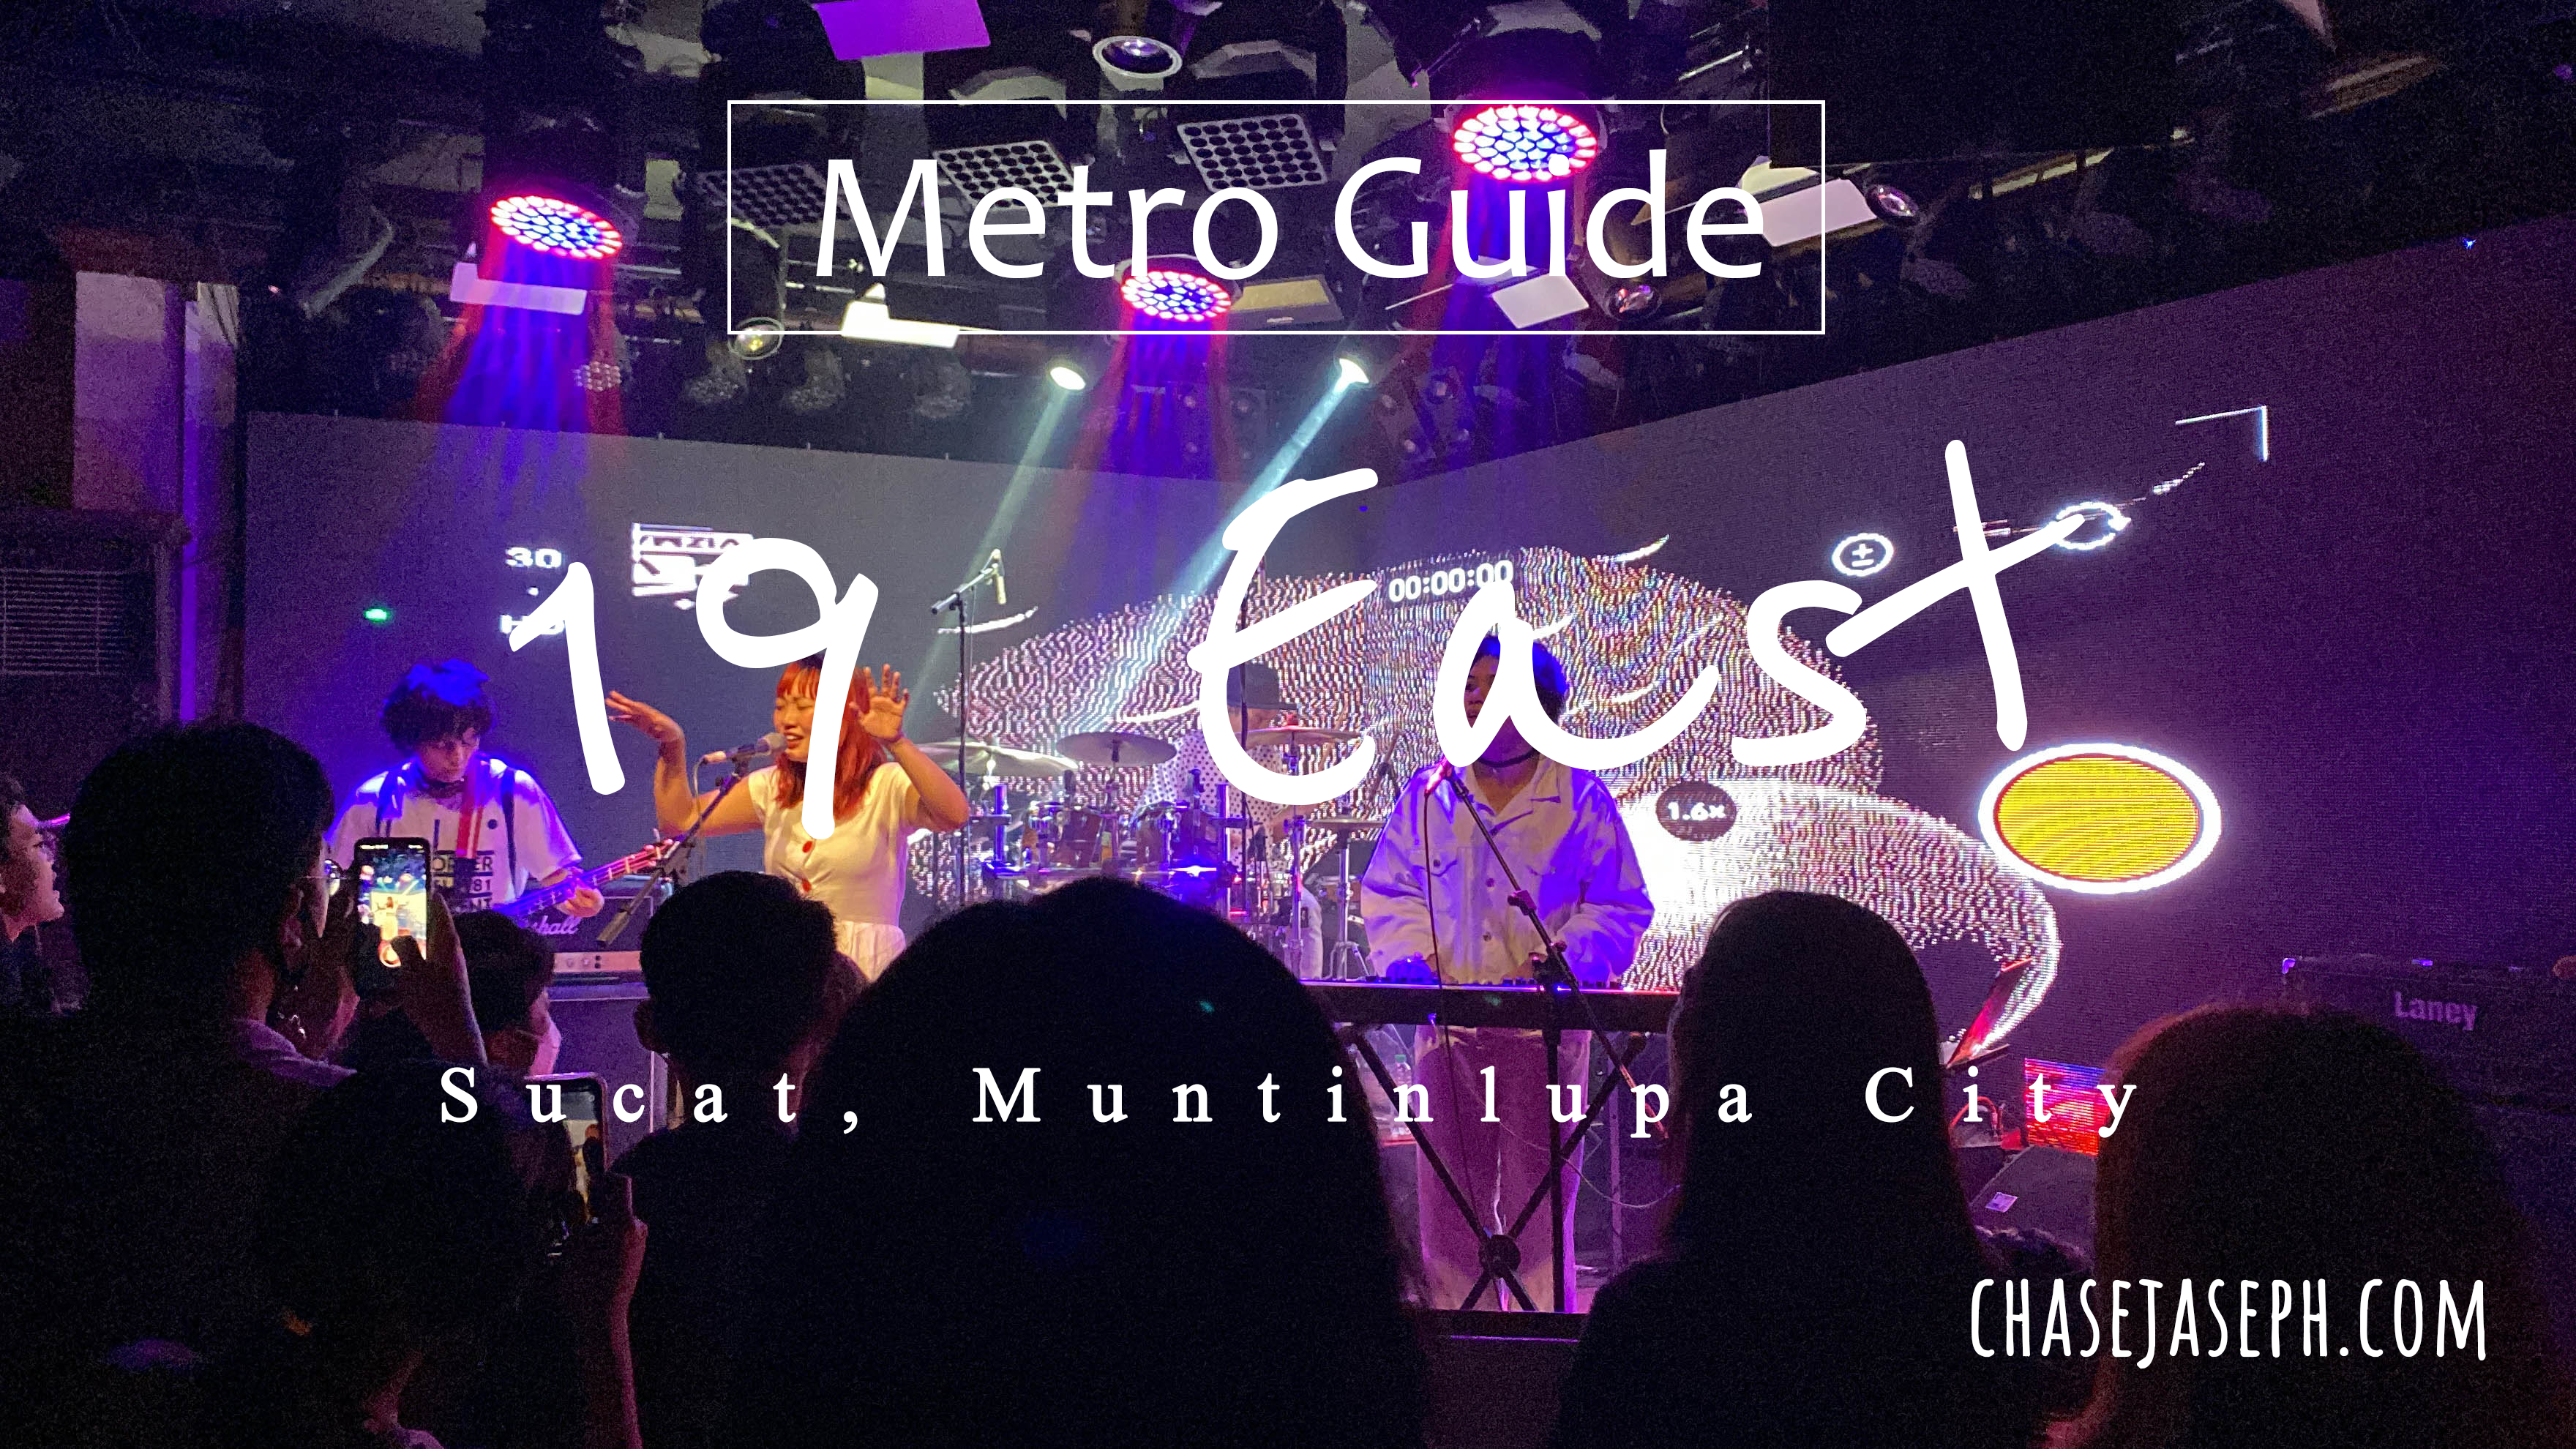 19 East Bar & Grill - Sucat, Muntinlupa City (Metro Guide)